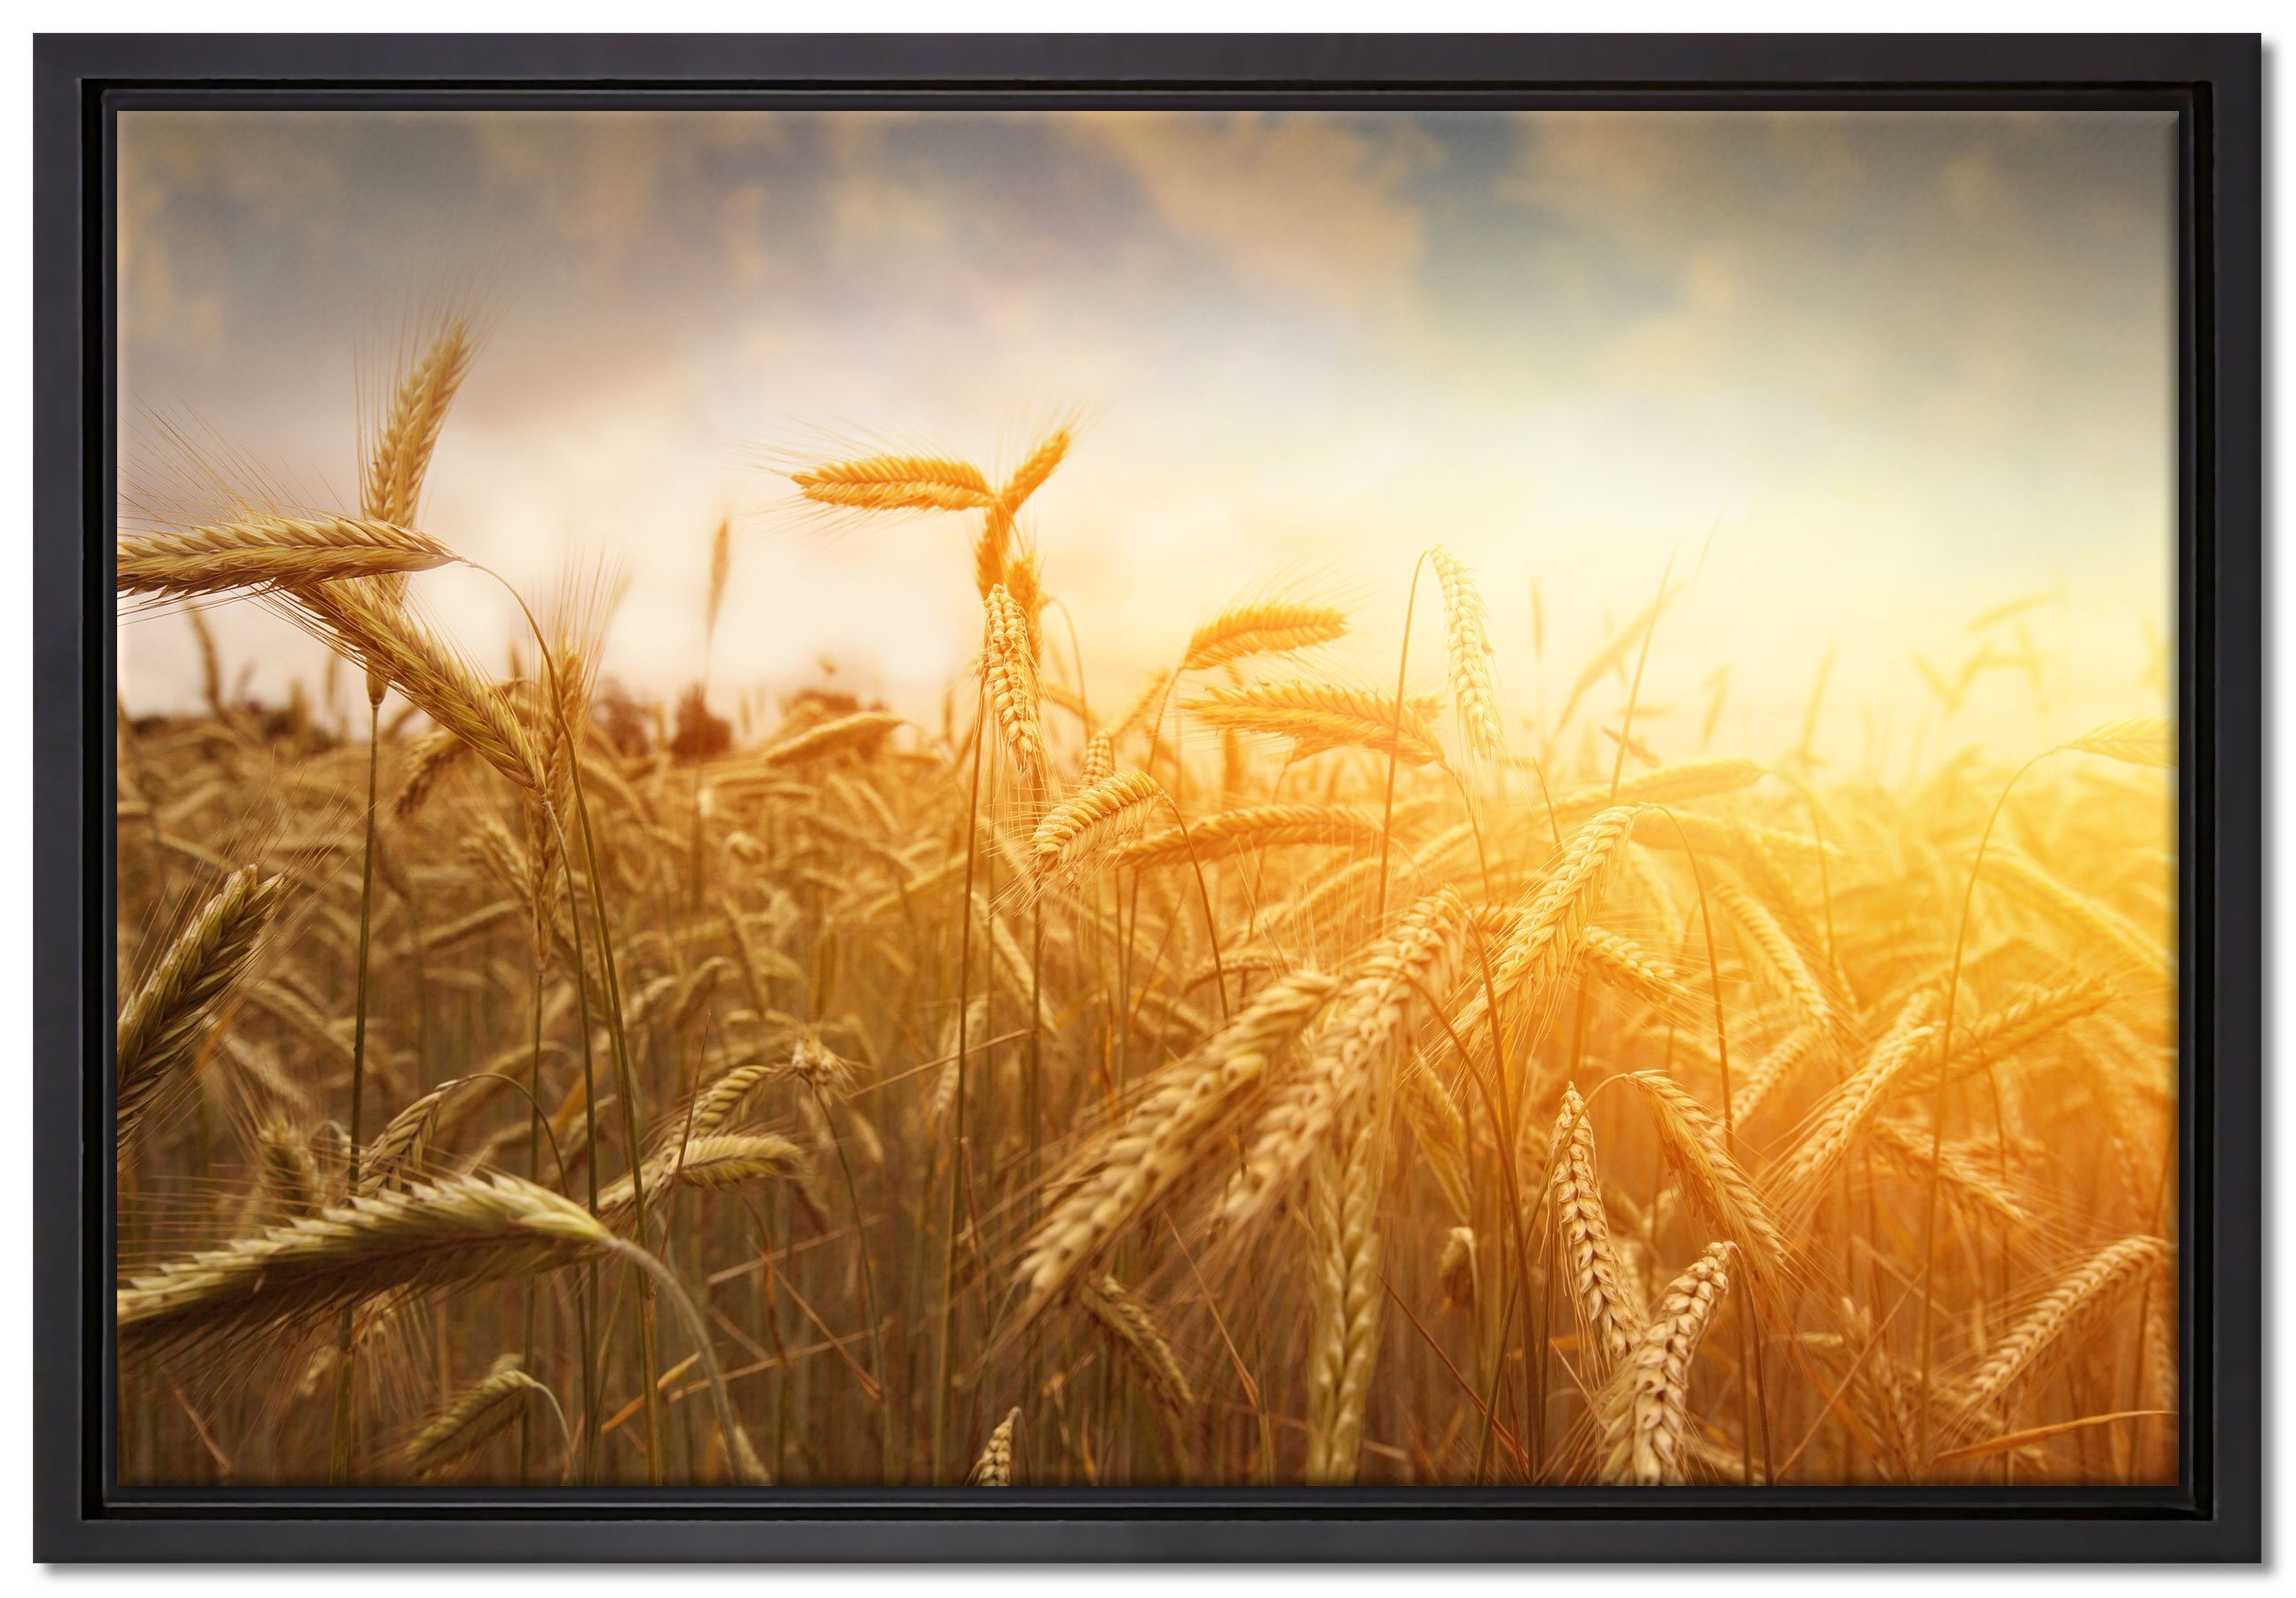 Pixxprint Leinwandbild Getreide im Sonnenlicht, Wanddekoration (1 St), Leinwandbild fertig bespannt, in einem Schattenfugen-Bilderrahmen gefasst, inkl. Zackenaufhänger